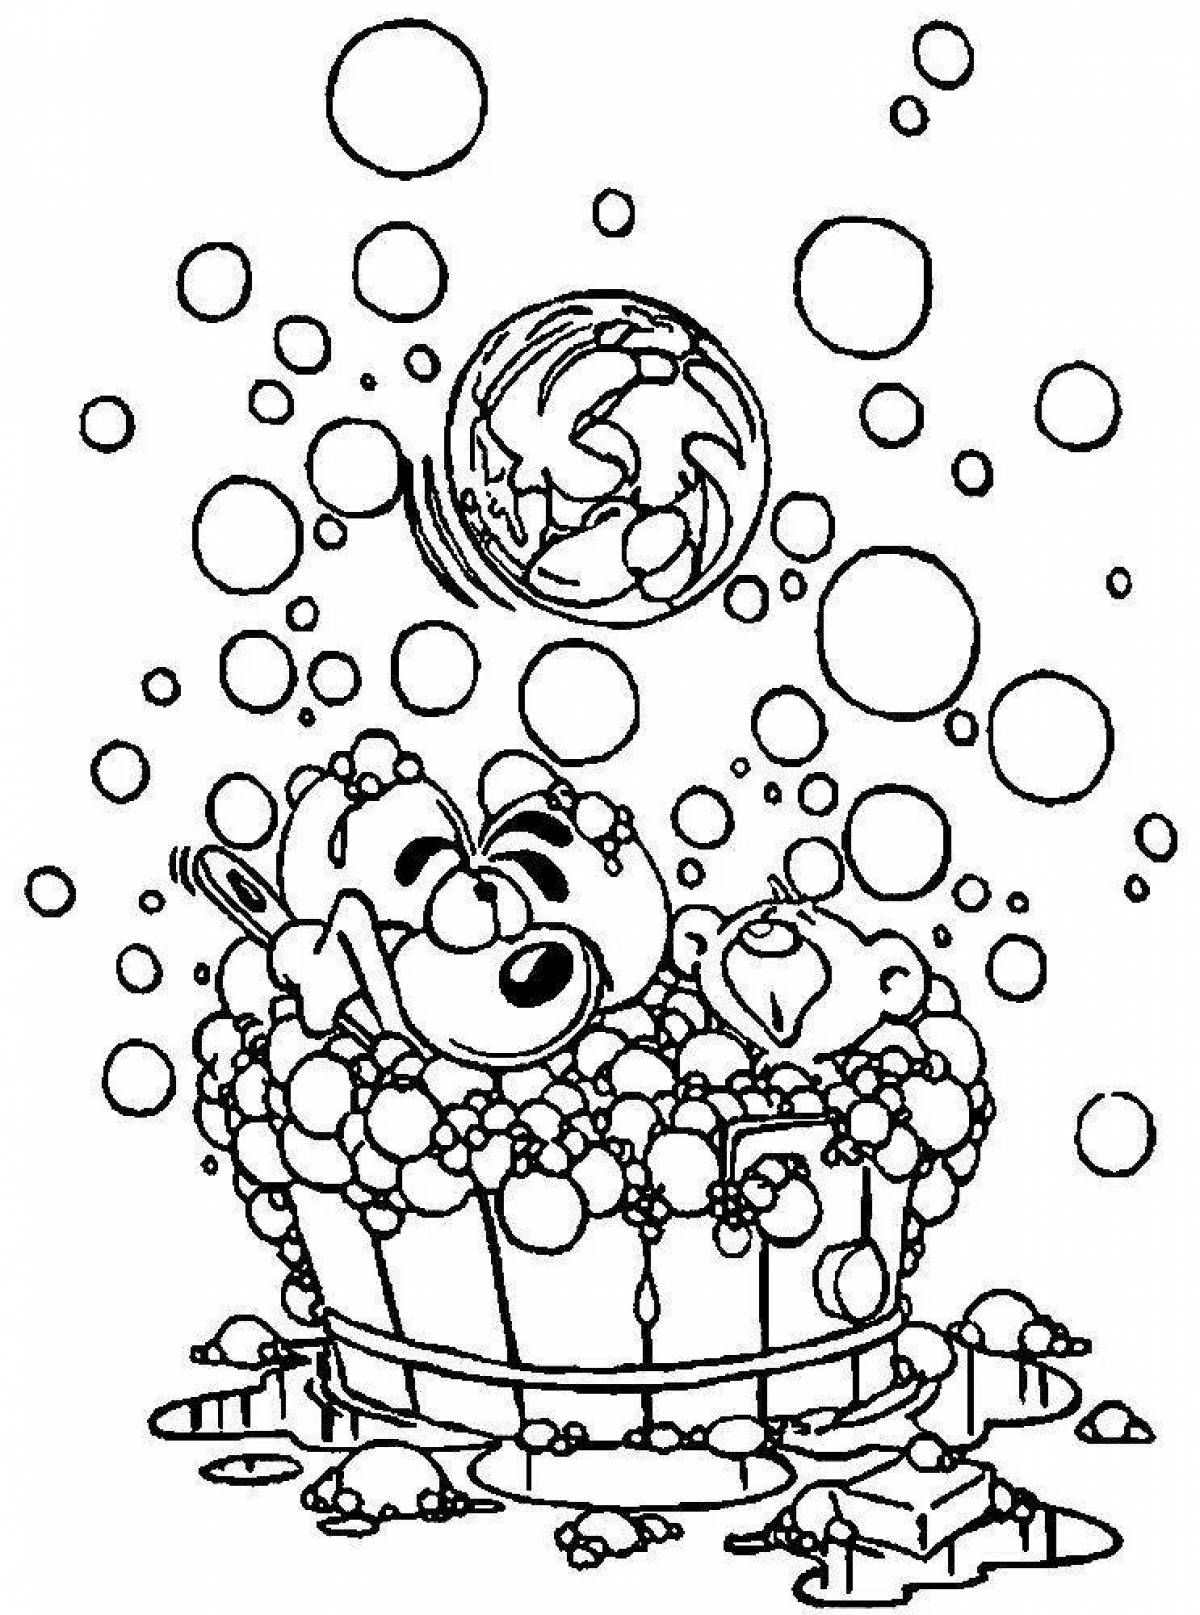 Bright bubbles coloring page